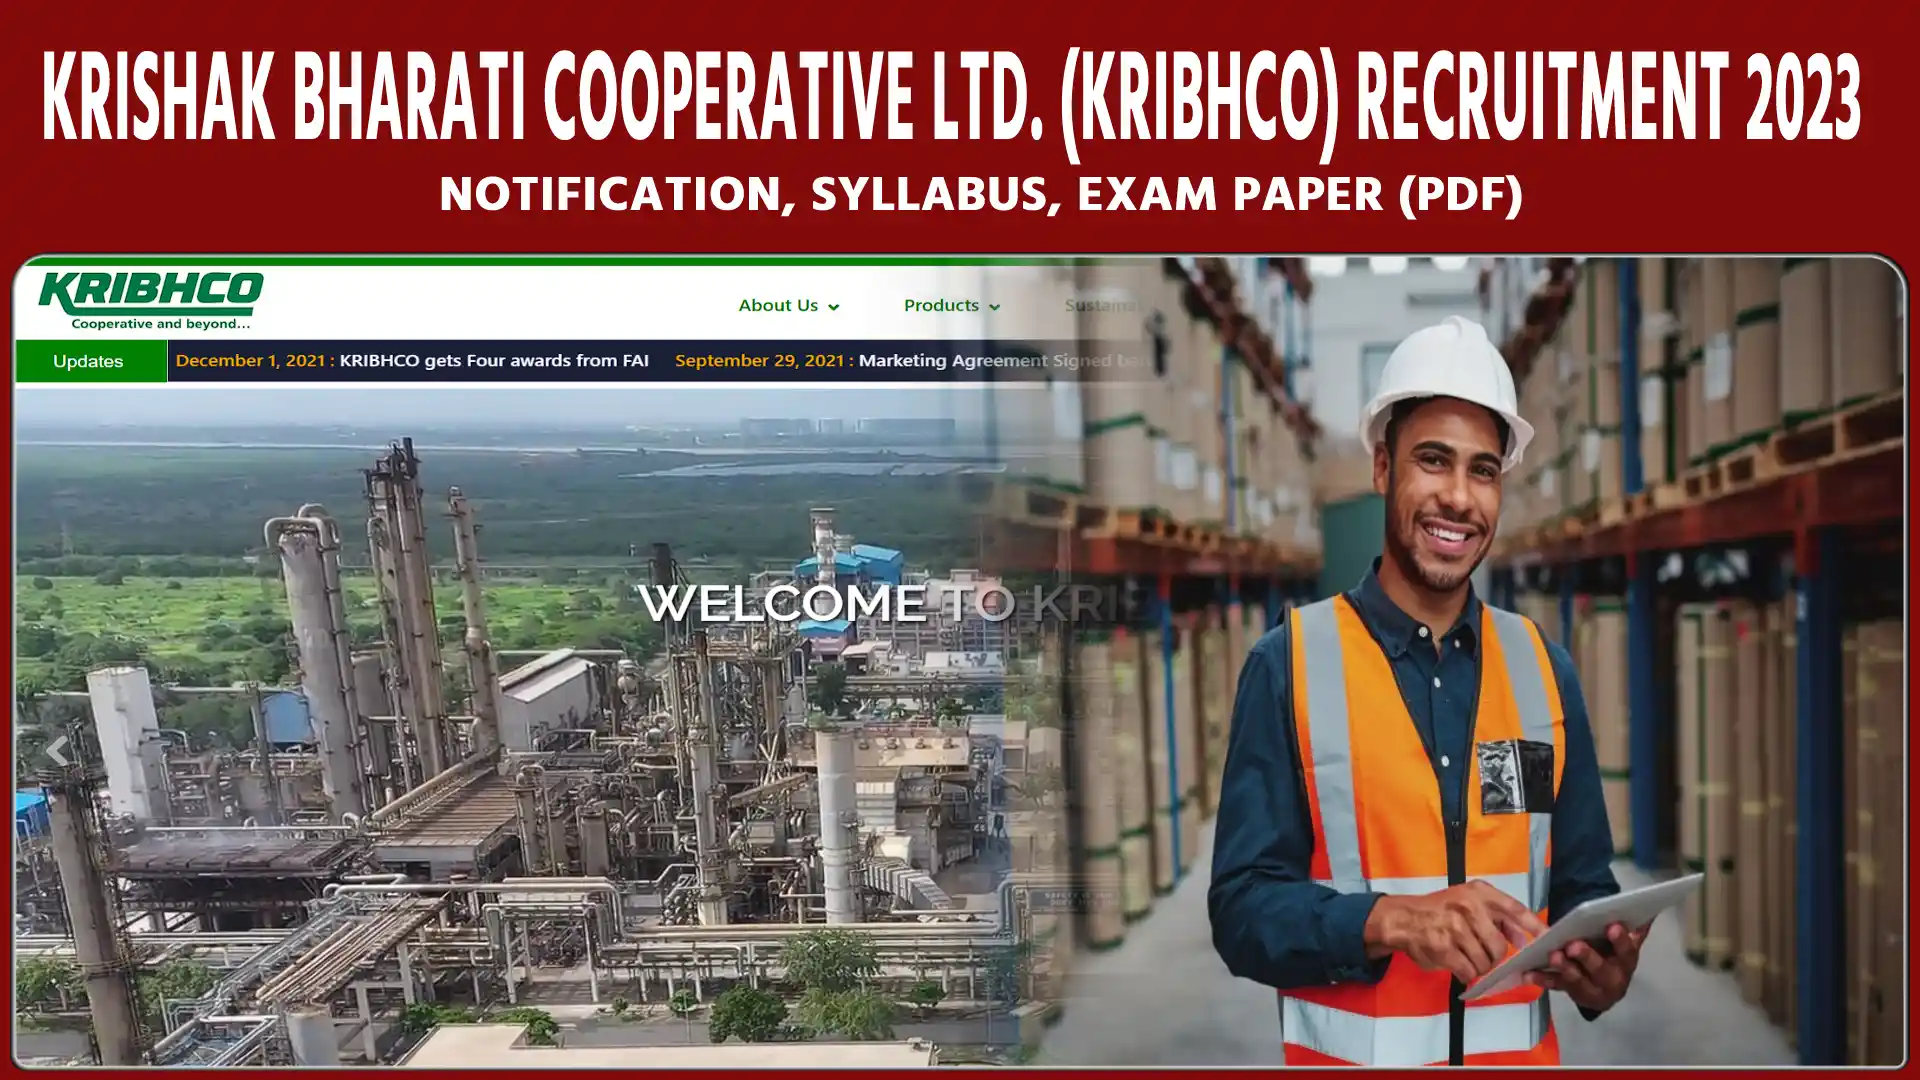 Krishak Bharati Cooperative Ltd. (KRIBHCO) Recruitment 2023 